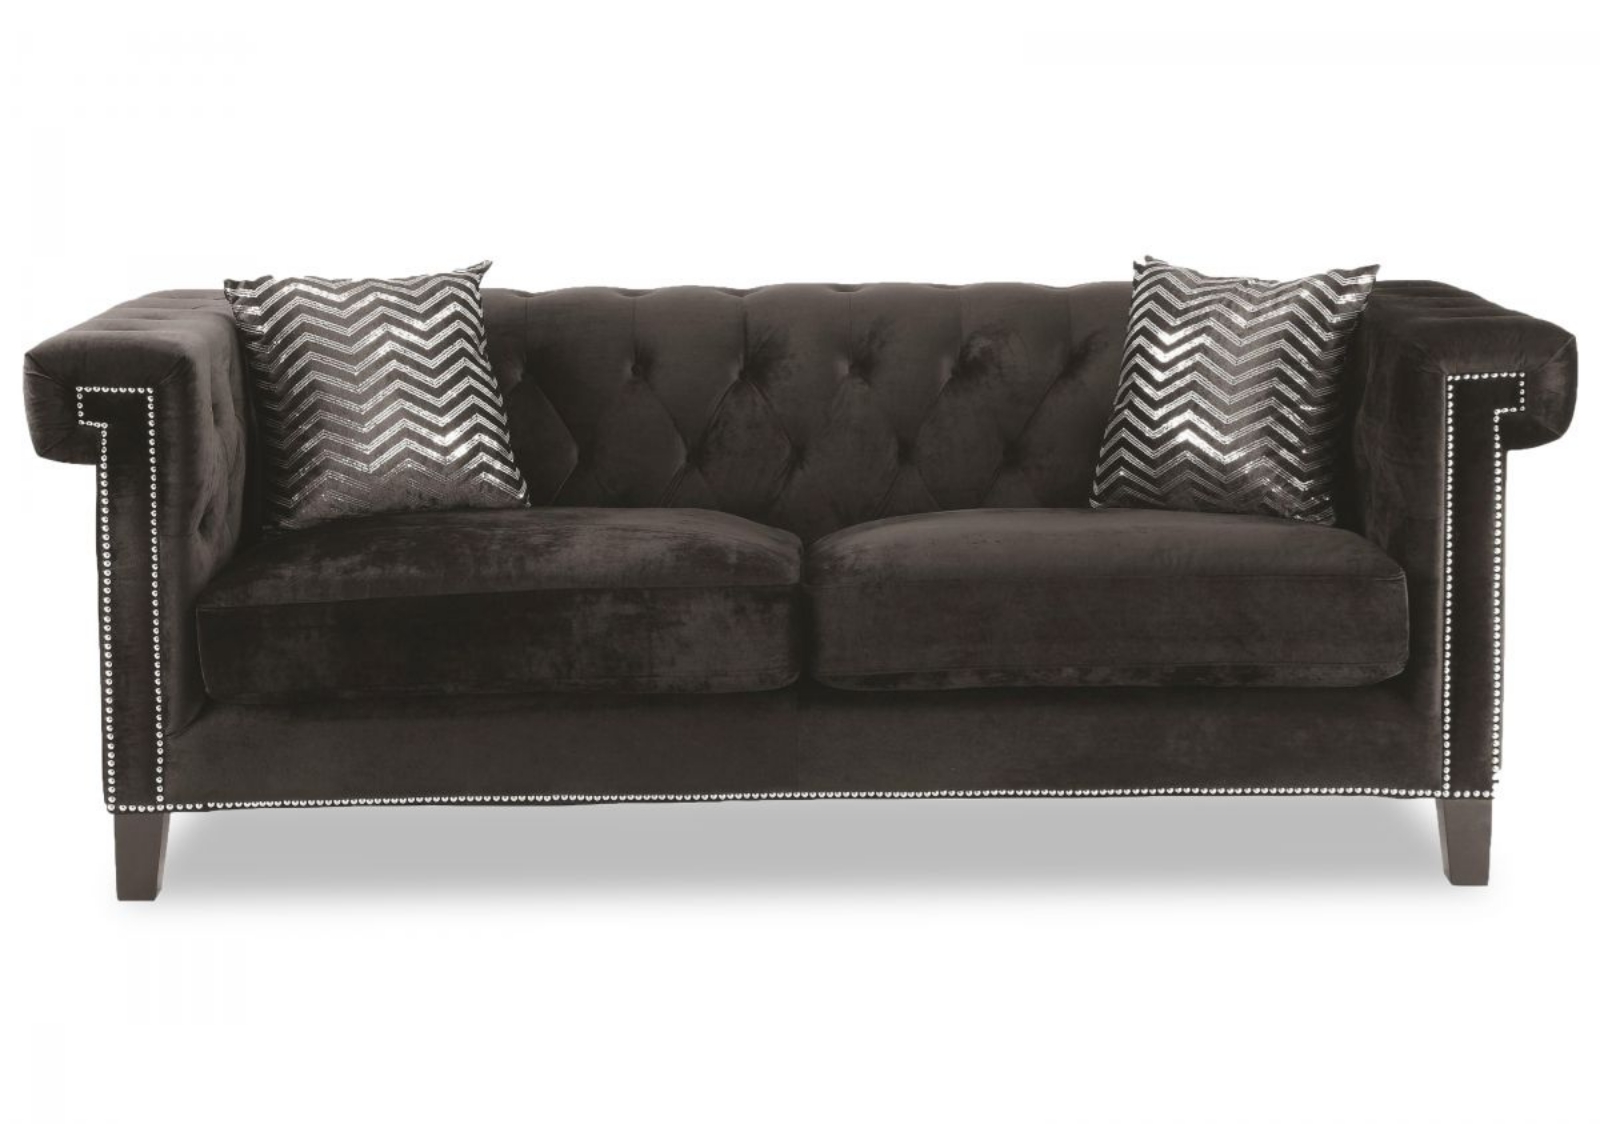 Picture of Reventlow Sofa